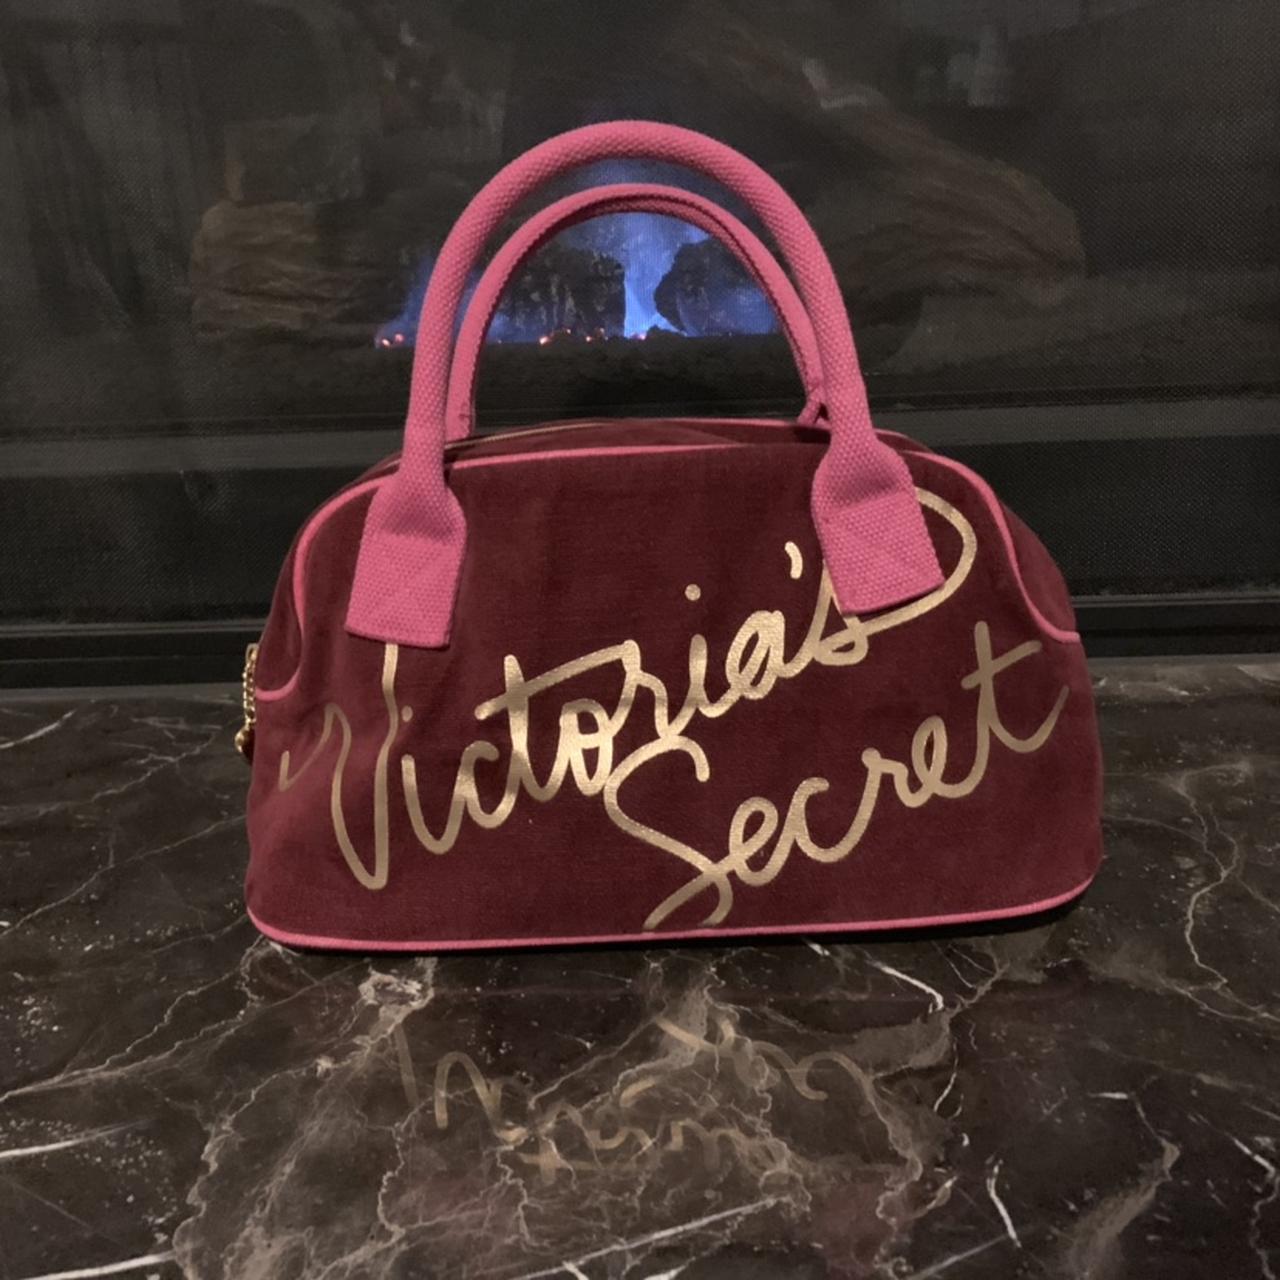 Vintage Victoria’s secret pink maroon purse with